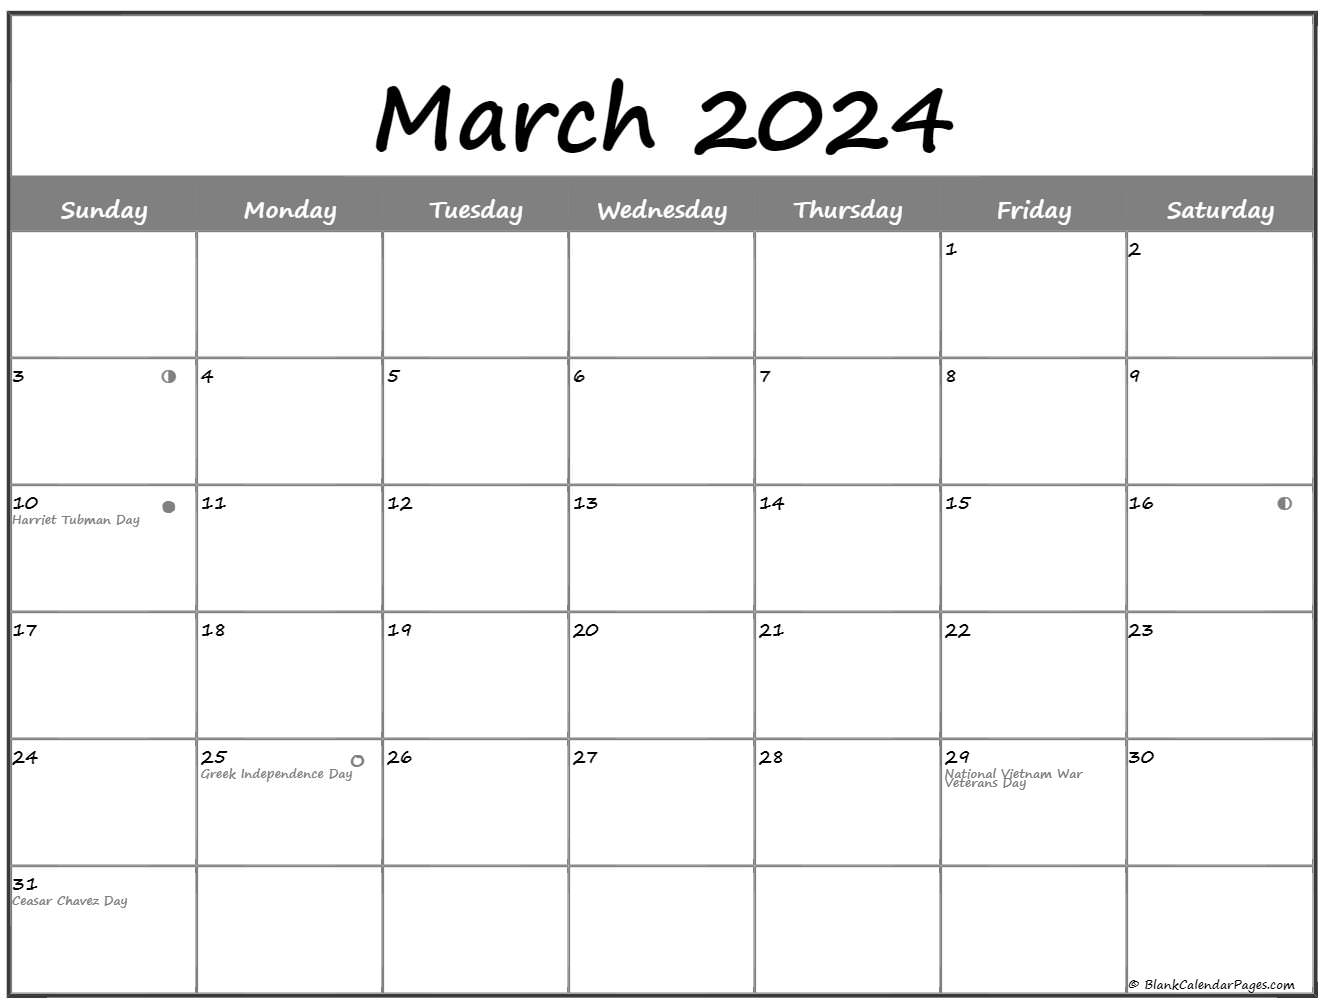 Календарь март 2022